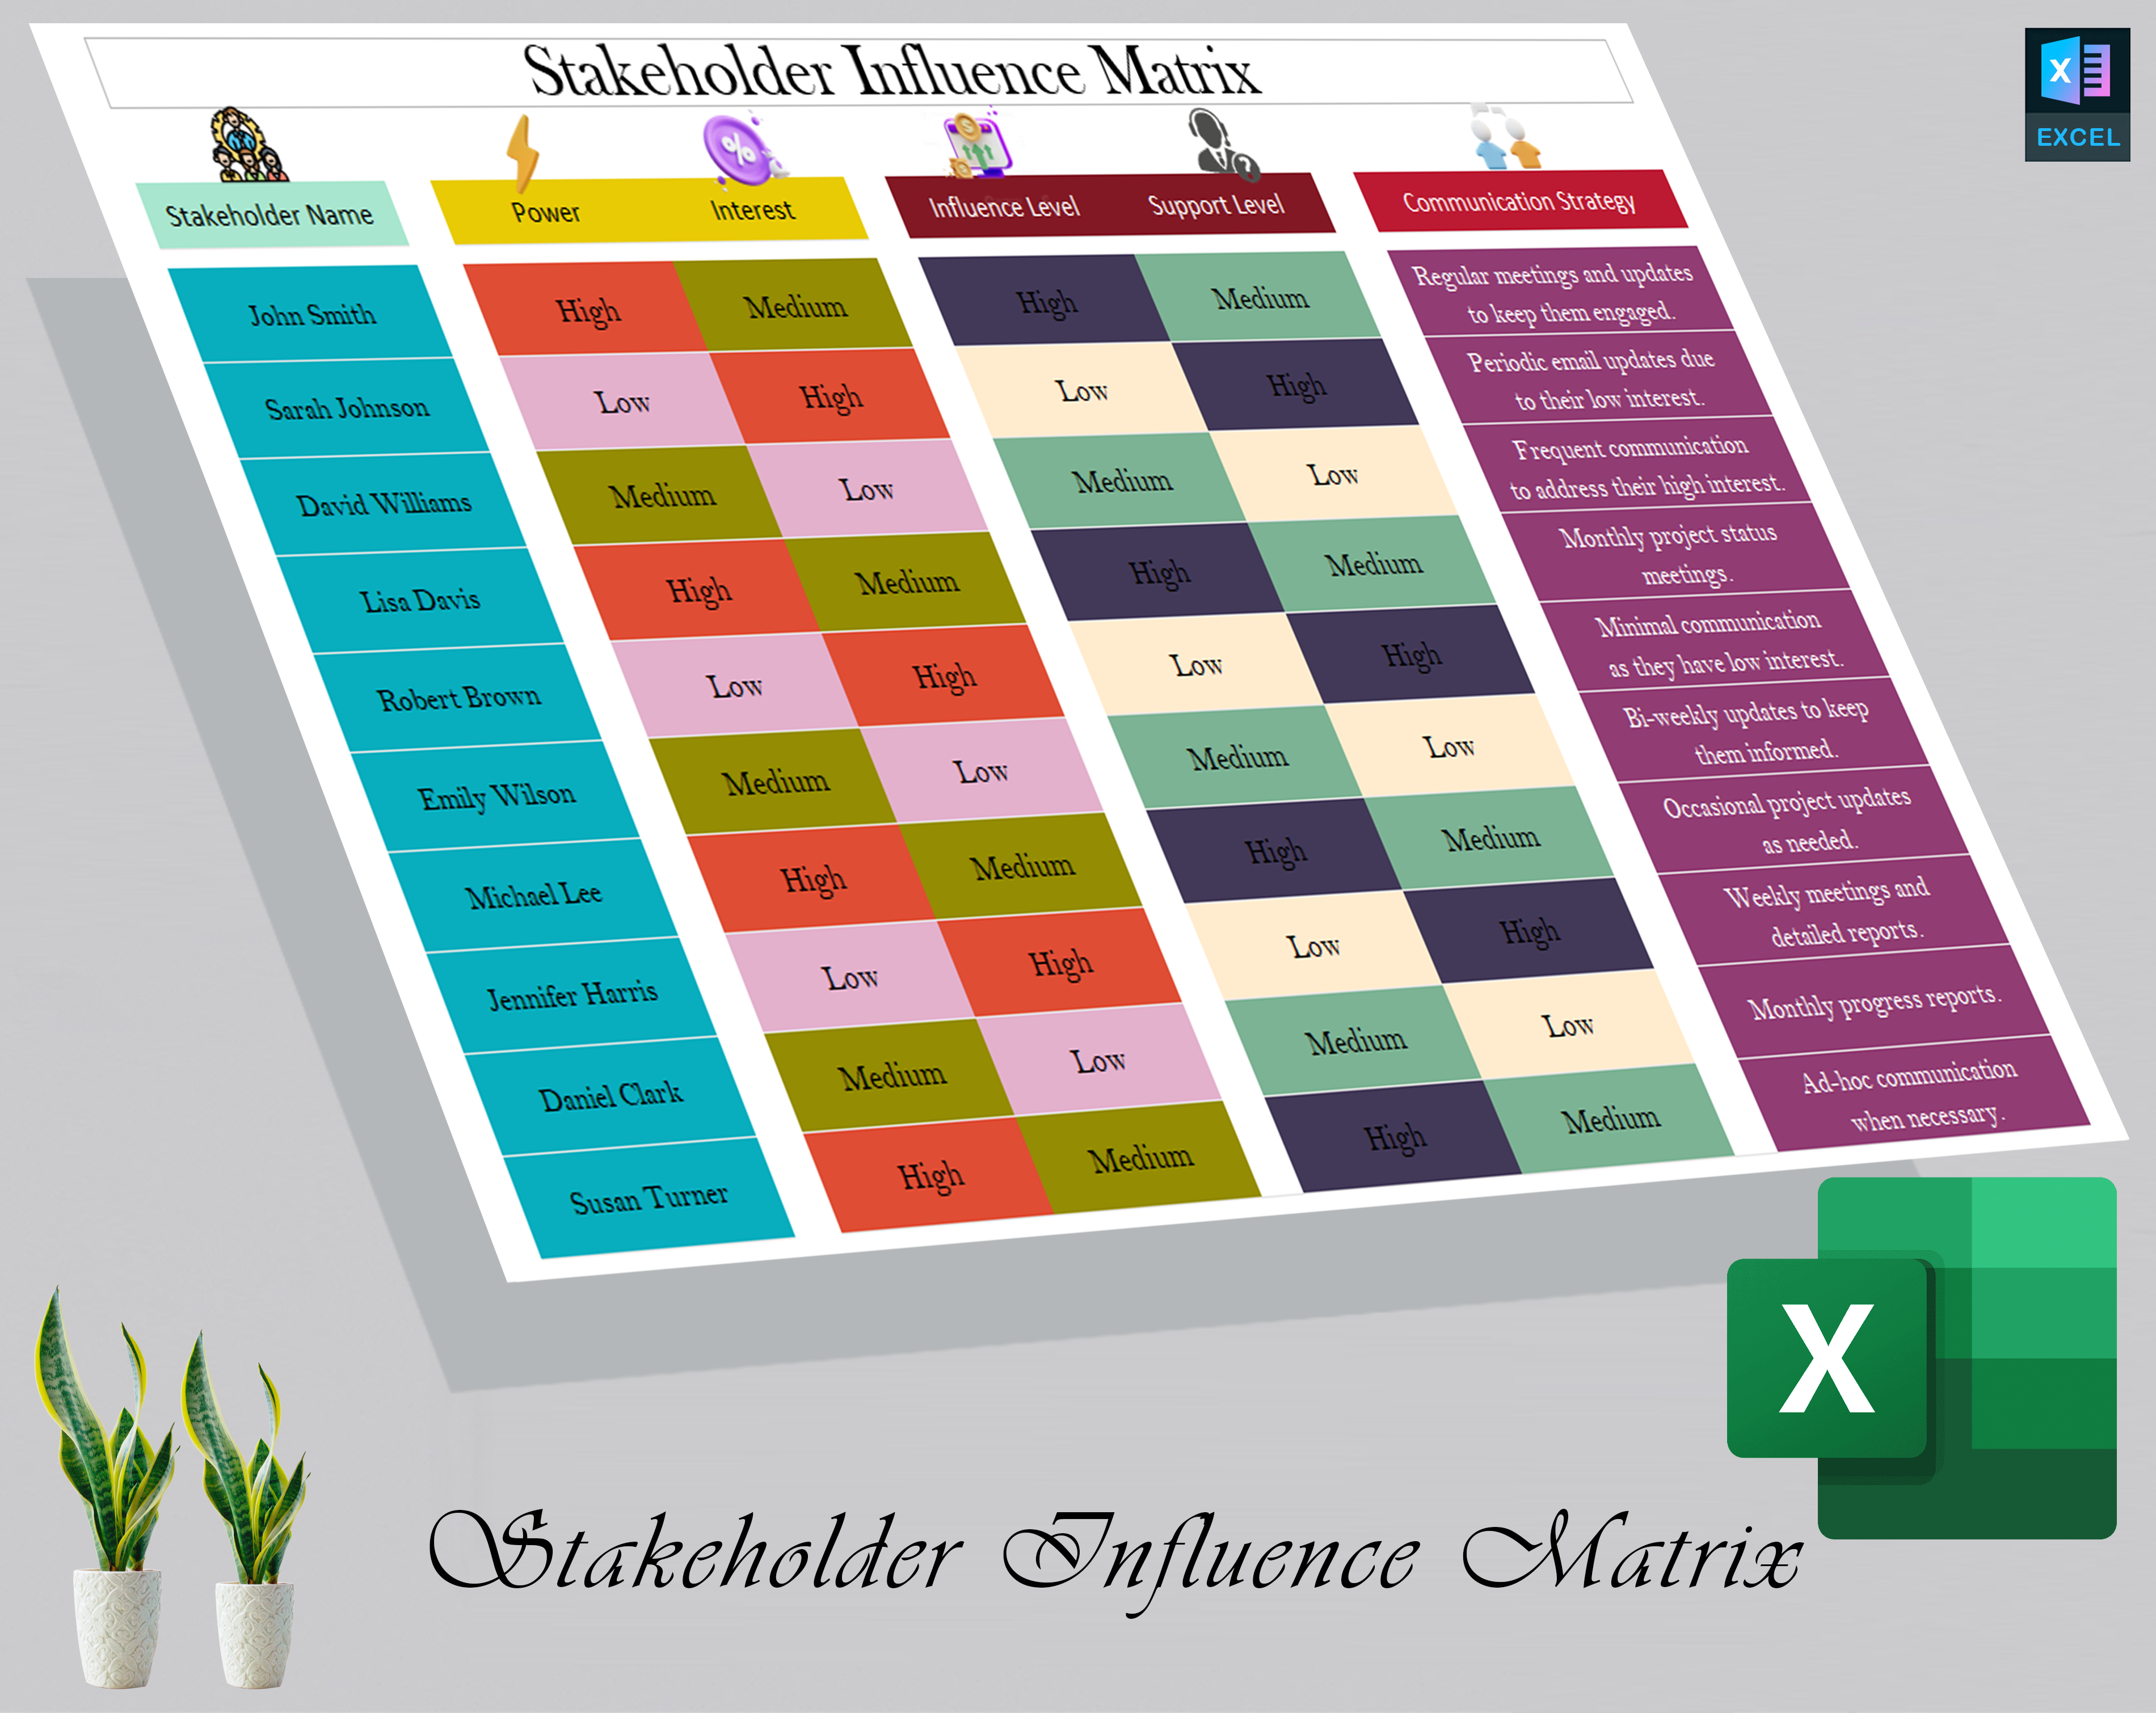 Stakeholder Influence Matrix